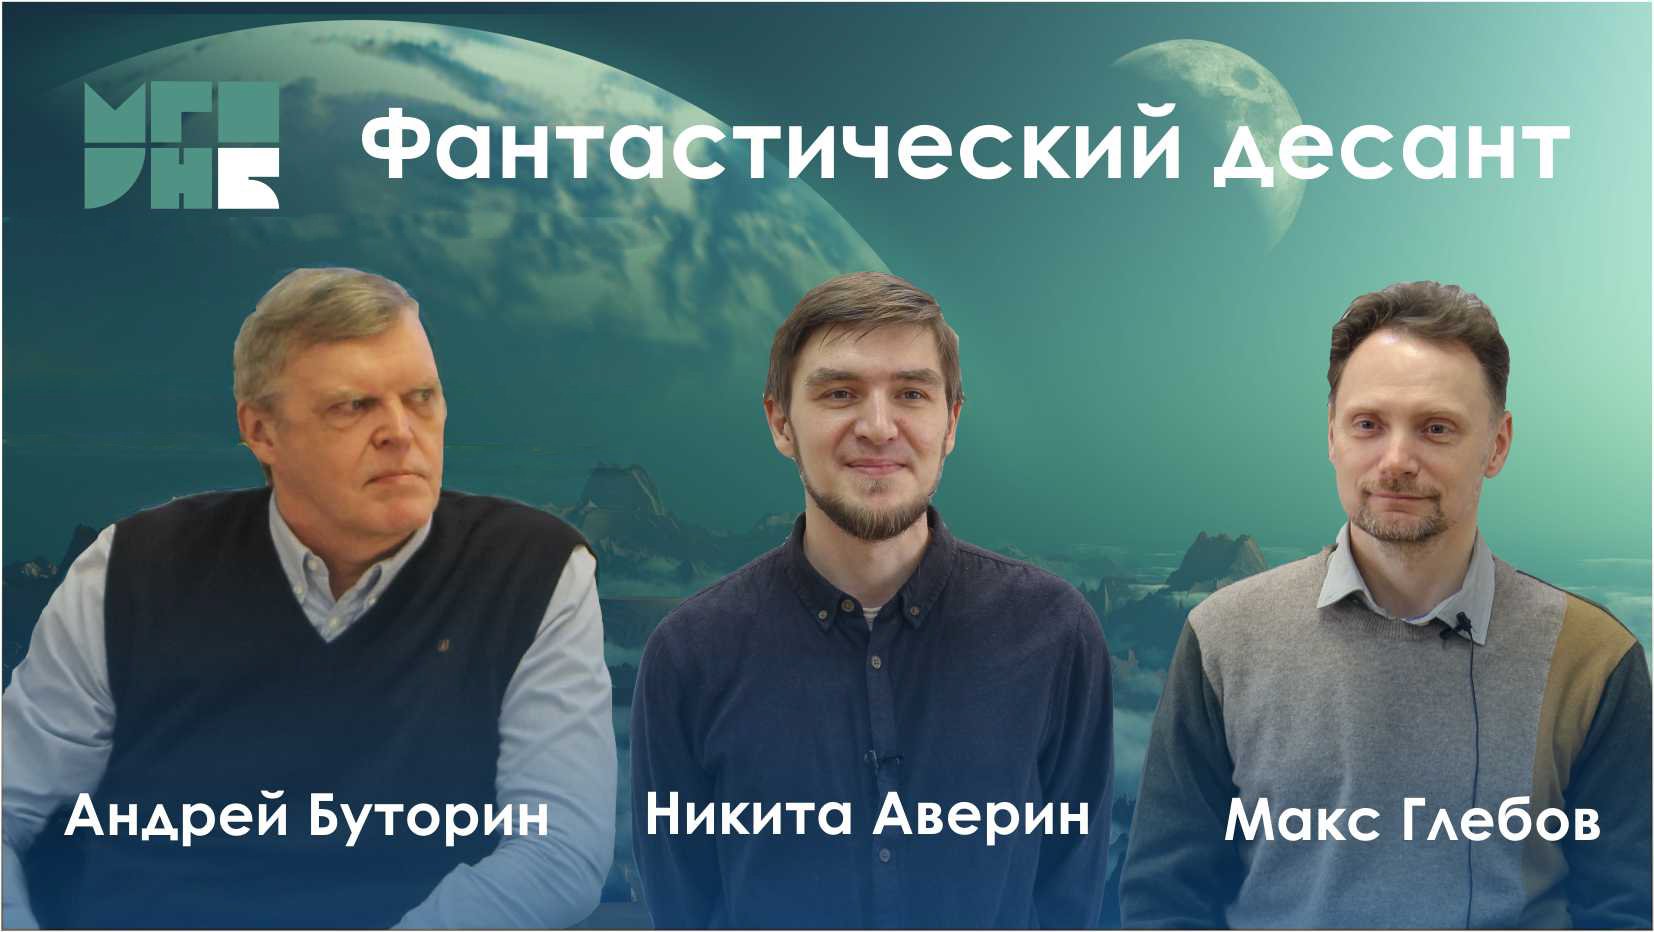 Фантастический десант: Макс Глебов, Никита Аверин, Андрей Буторин